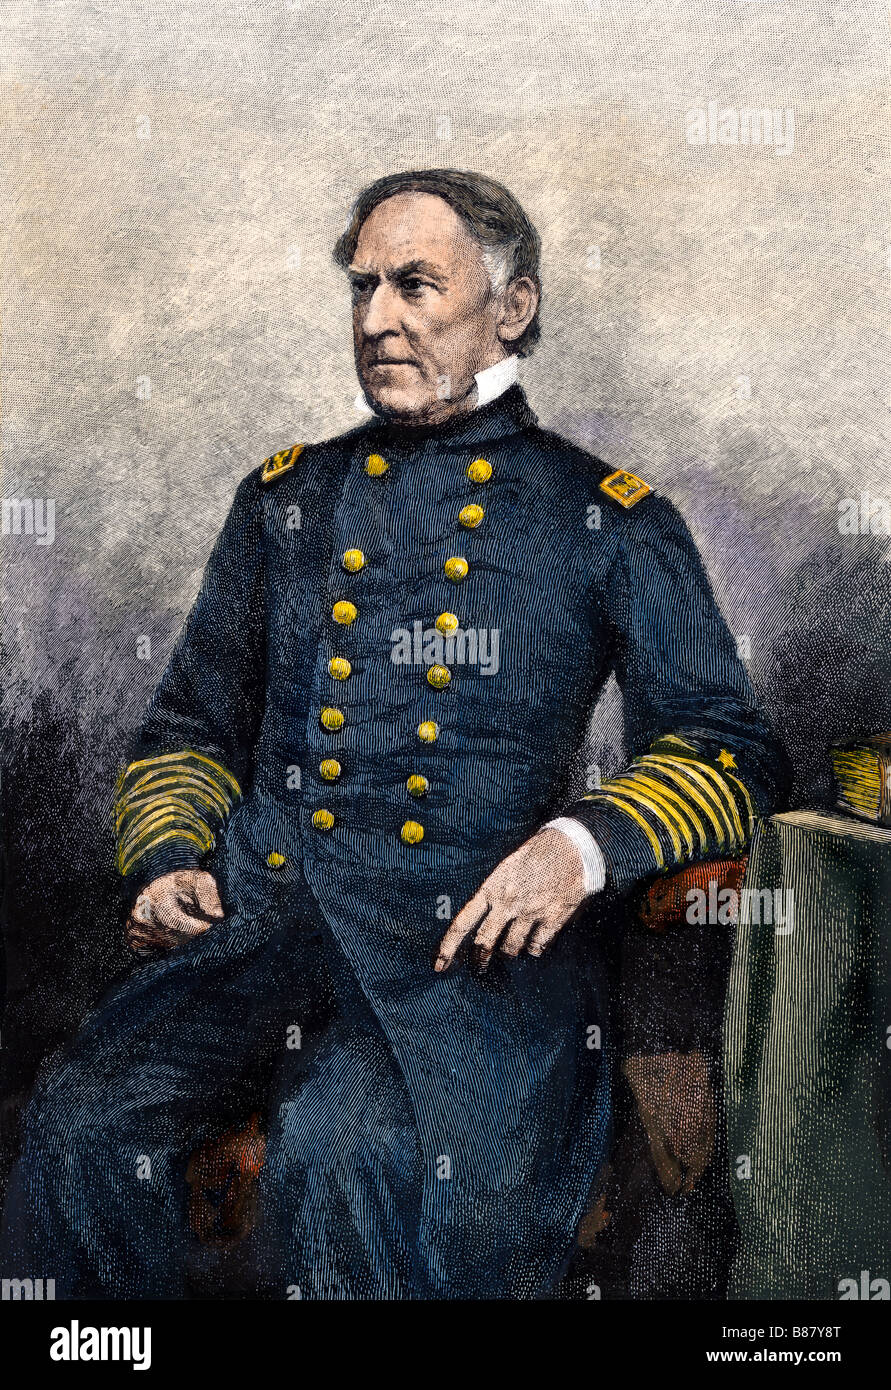 Admiral David Glasgow Farragut portrait. Hand-colored engraving Stock Photo